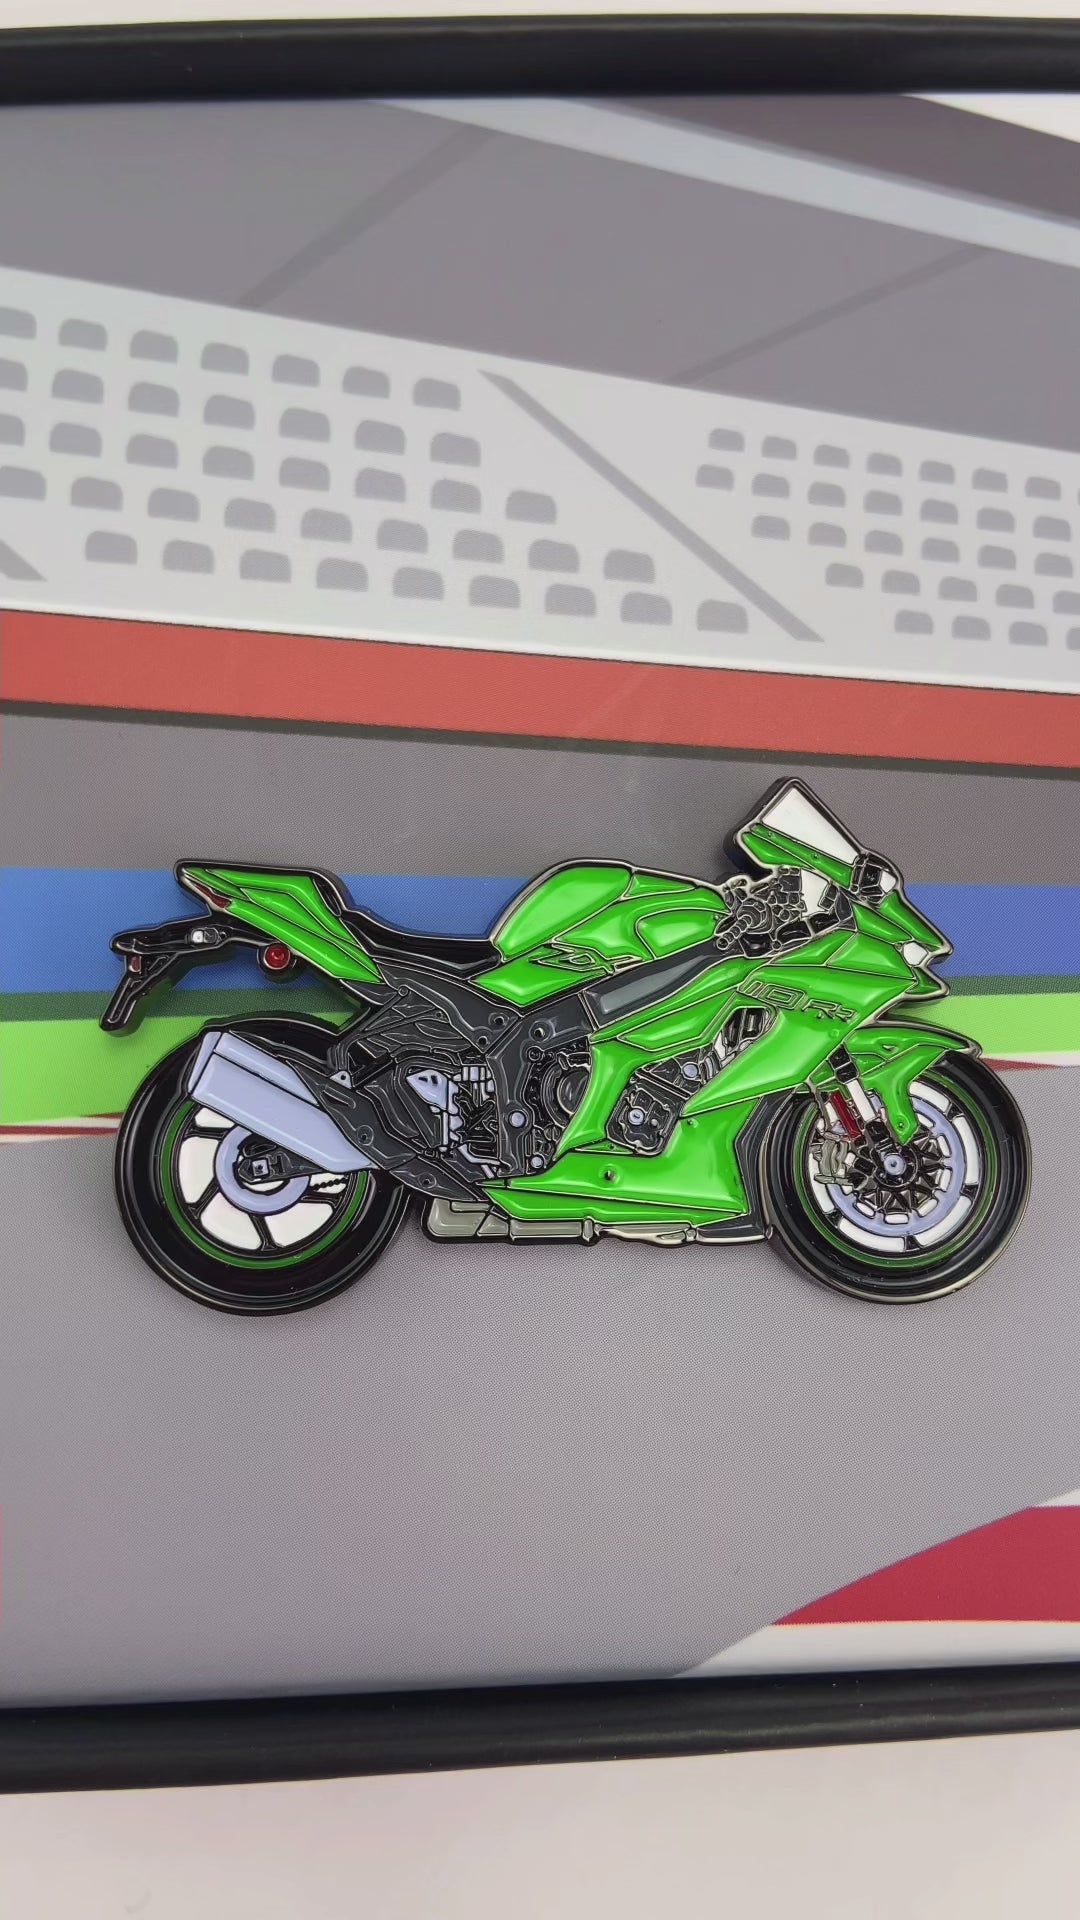 Motopins-Kawasaki-Ninja-ZX-10RR-Sportbike-Motorbike-Lapel-Jacket-Hat-Pins-Badge-Gift-for-Motorcycle-Rider-Lover-Biker-Video